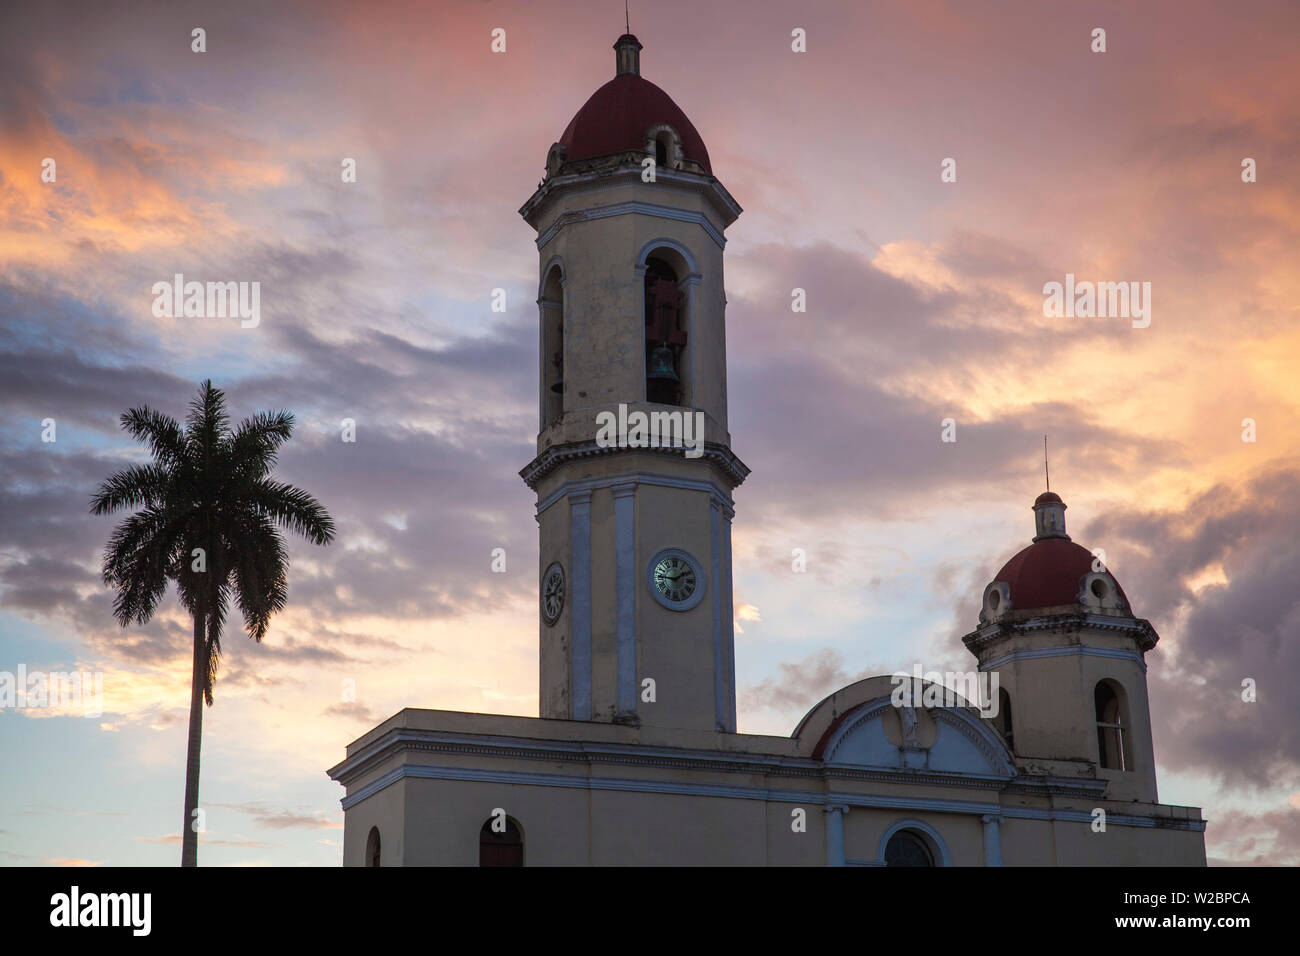 Cuba, Cienfuegos, Parque MartÃ, Catedral  de la Purisima Concepcion - Cathedral of the Most Pure Conception Stock Photo